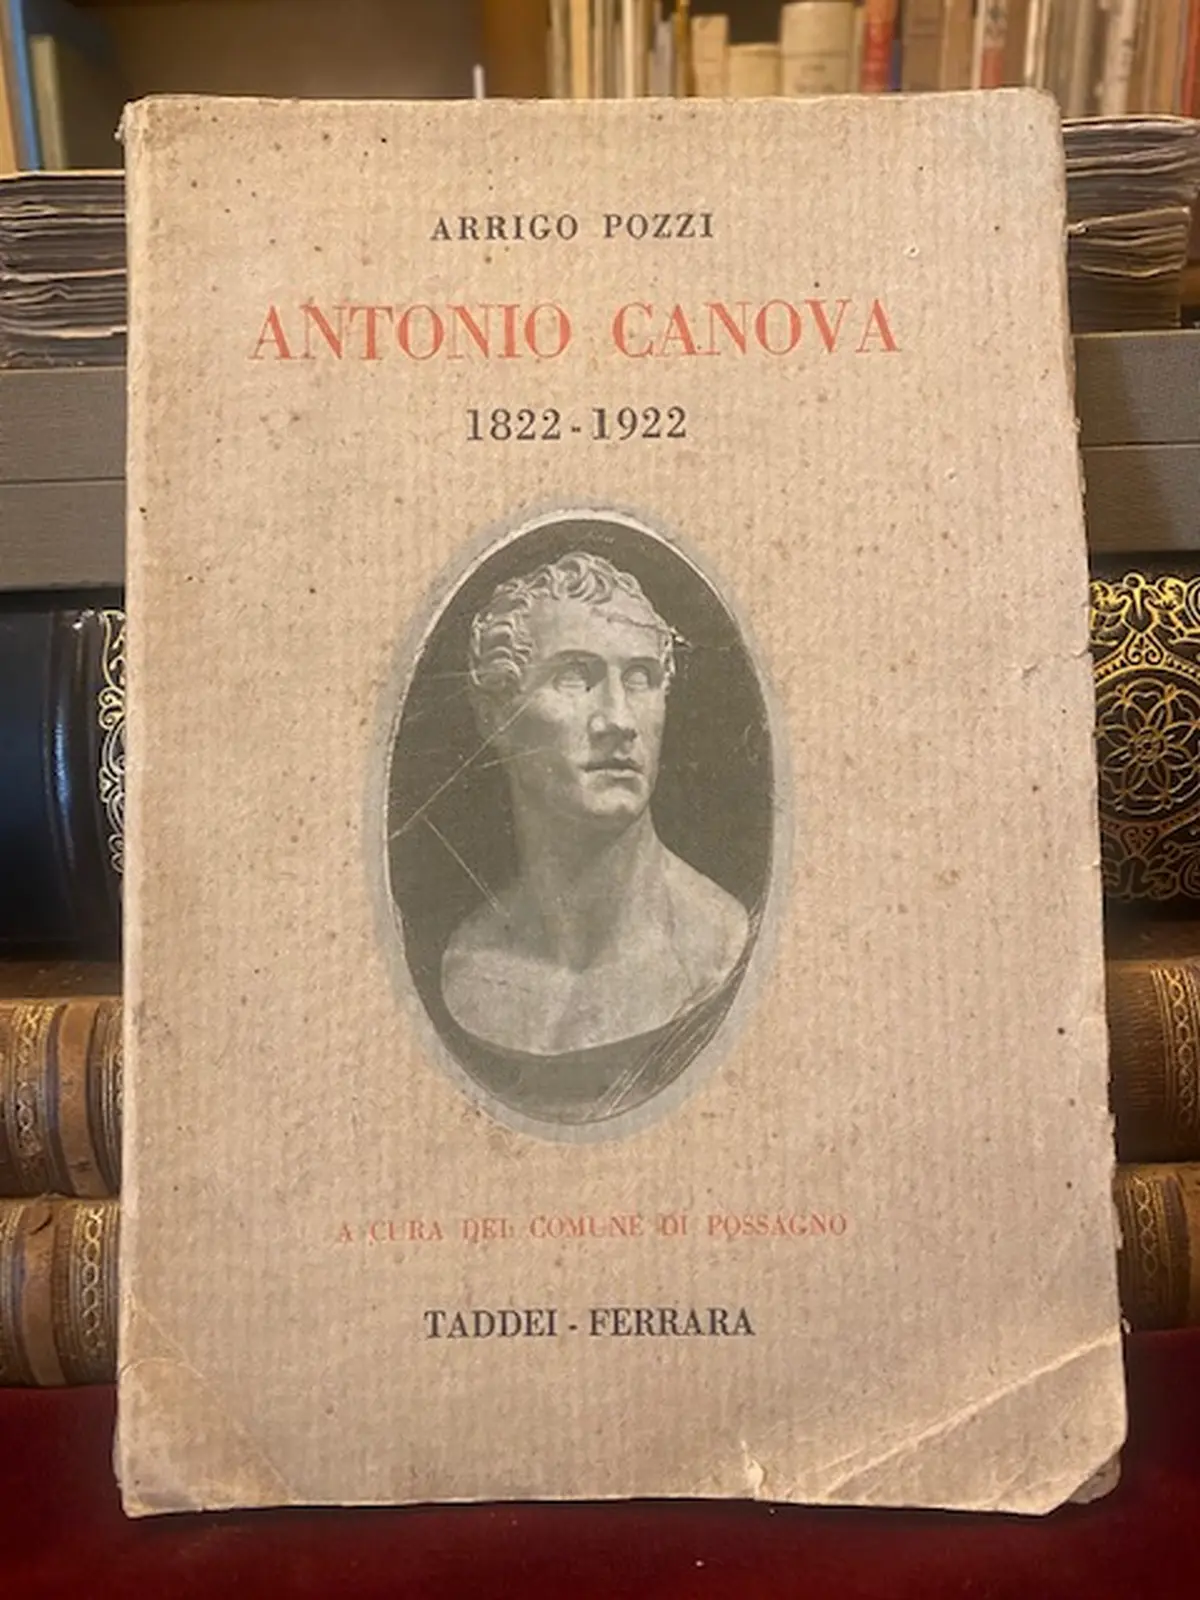 Antonio Canova 1822-1922.